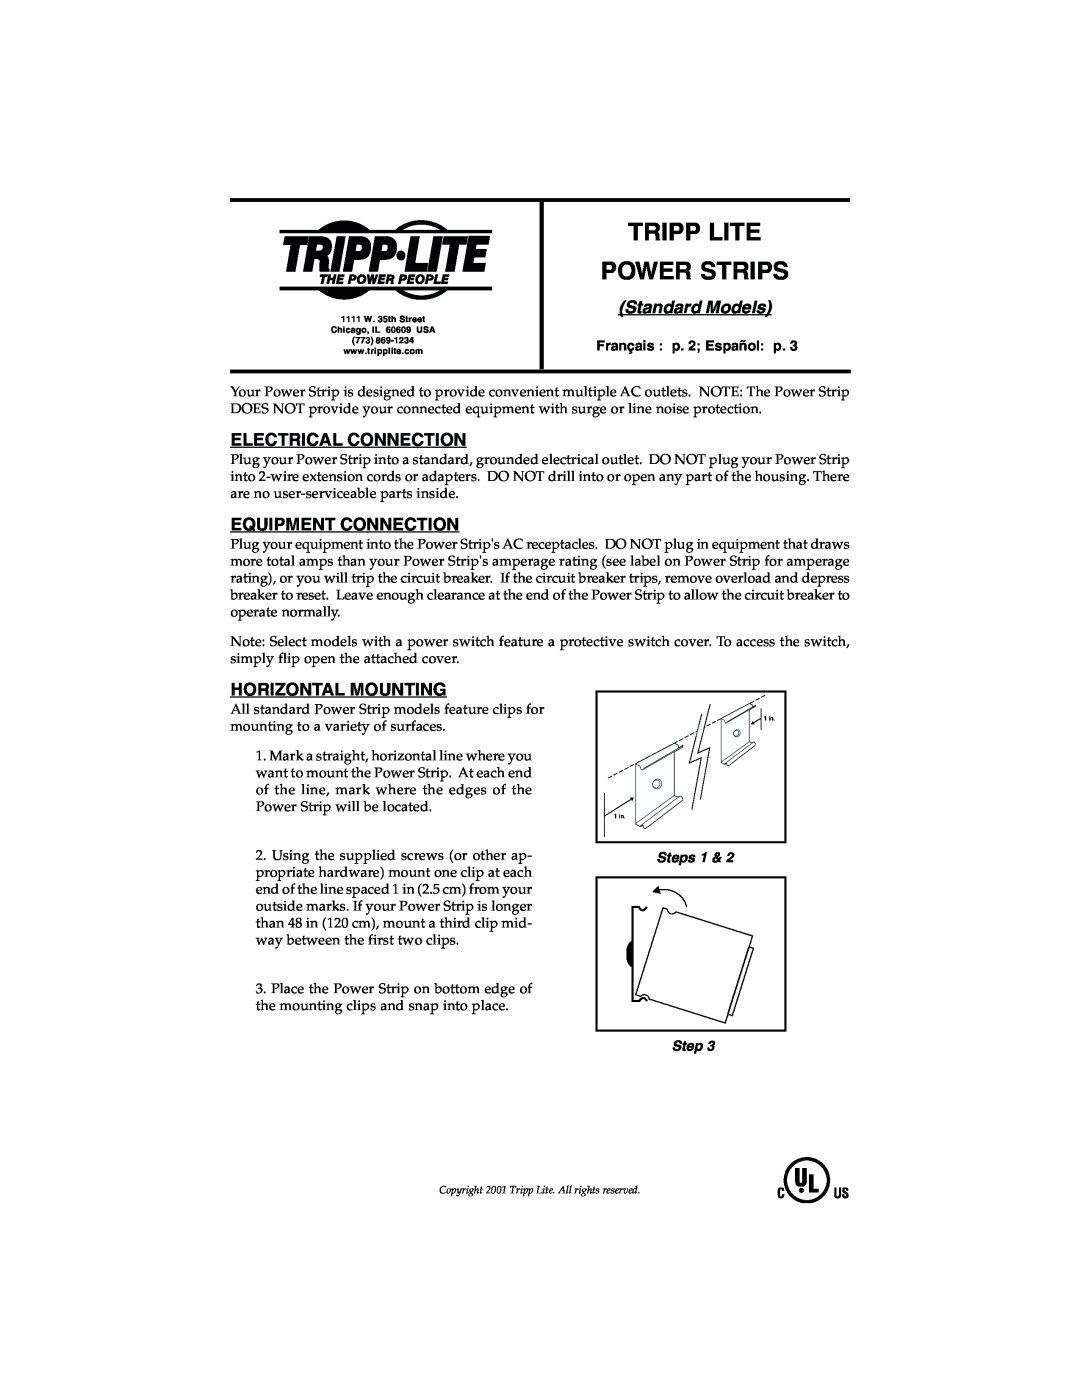 Tripp Lite 93-1990 (200108029) user service Tripp Lite Power Strips, Standard Models, Electrical Connection, Steps 